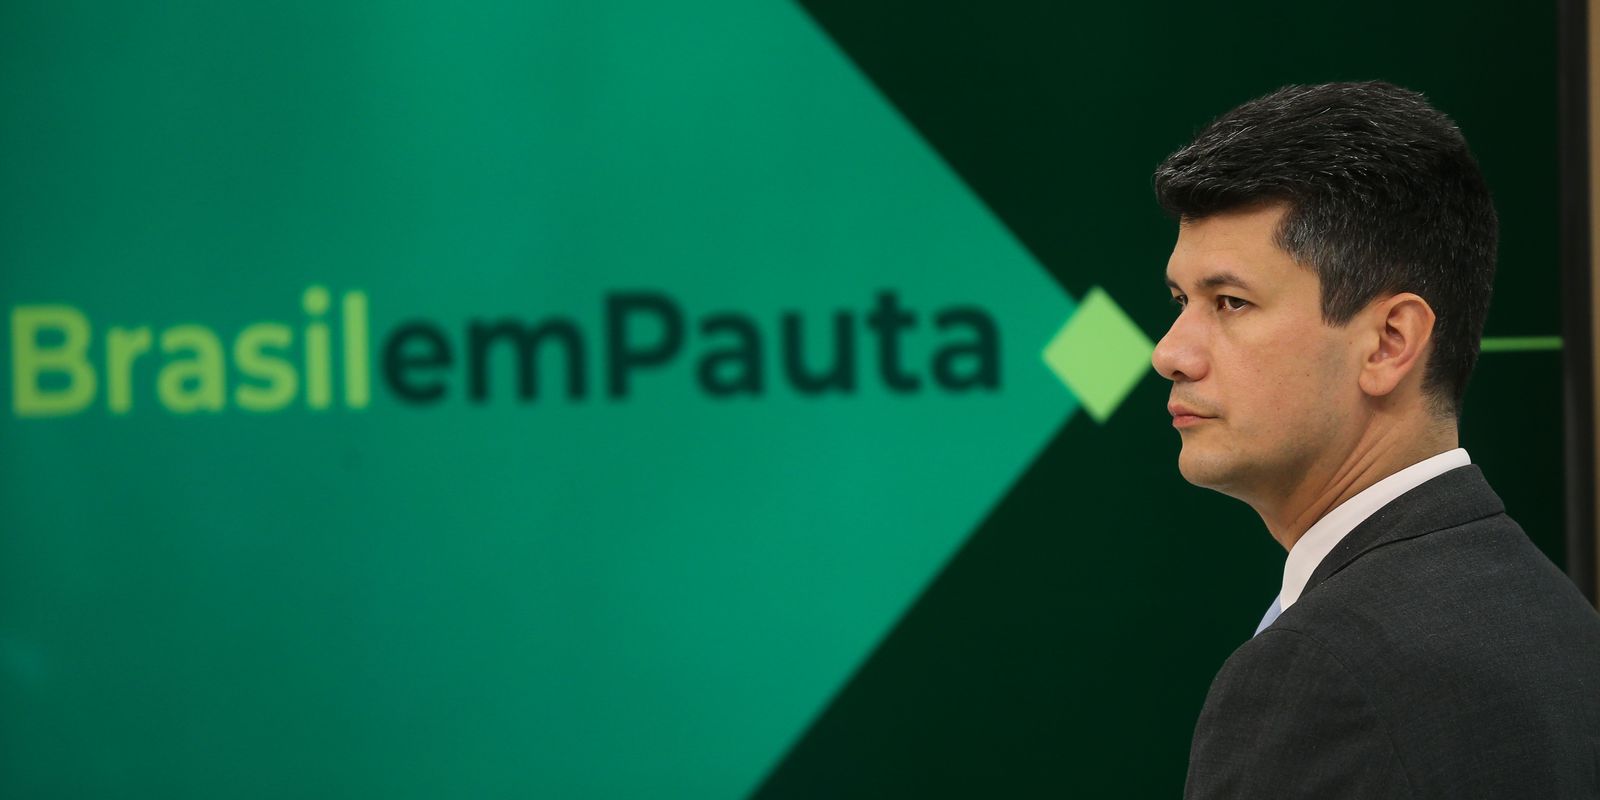 BNDES President talks about green economy in Brazil in Agenda